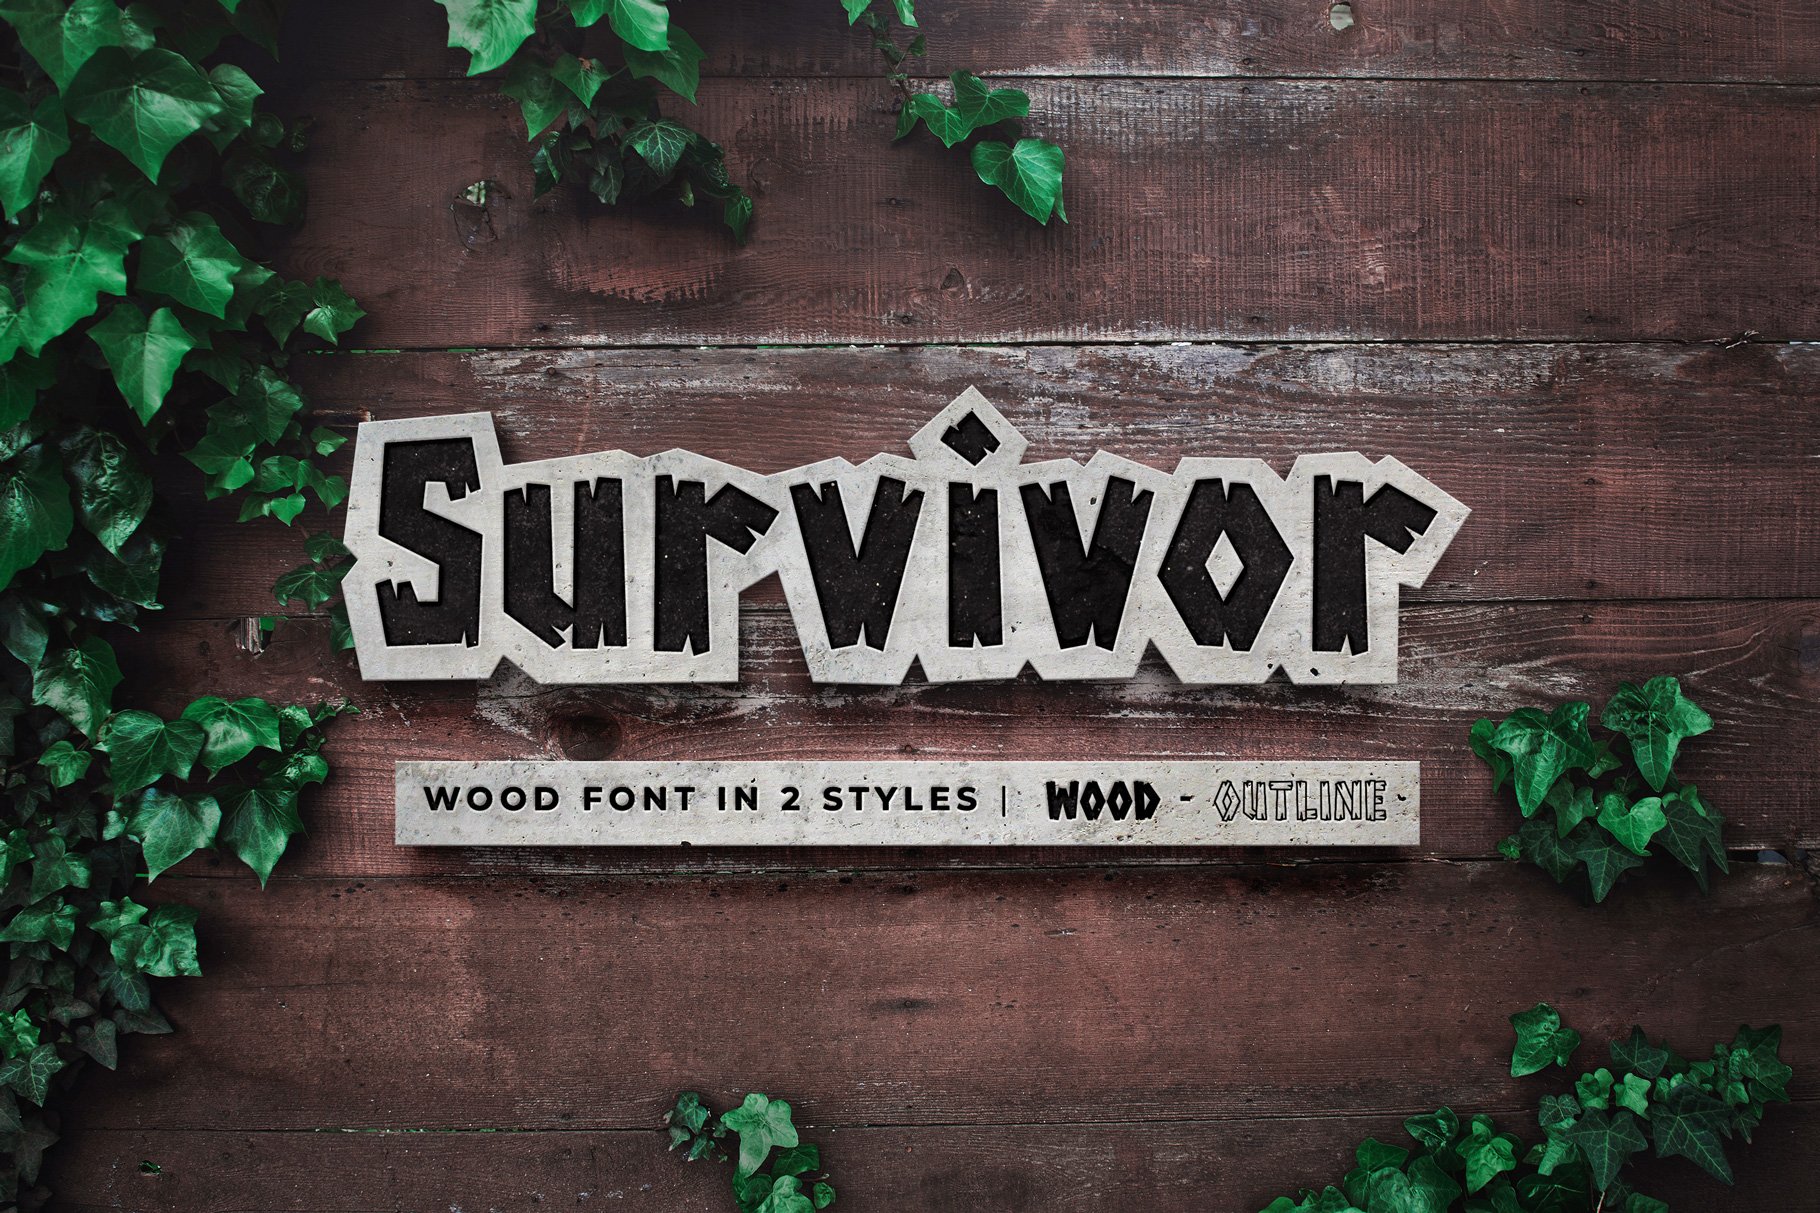 Survivor Wood Font cover image.